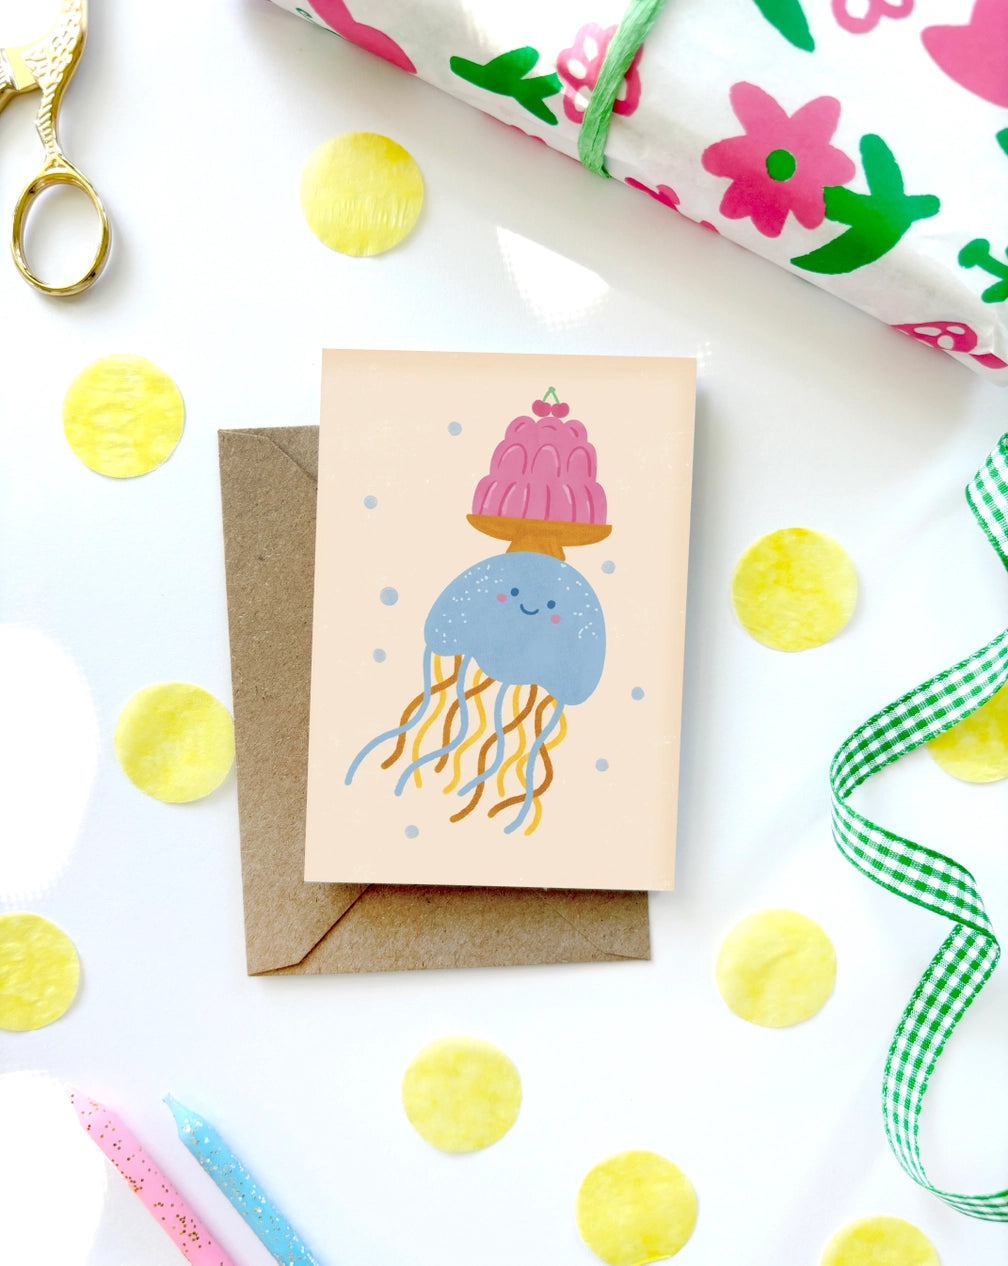 Mini Card | Jellyfish